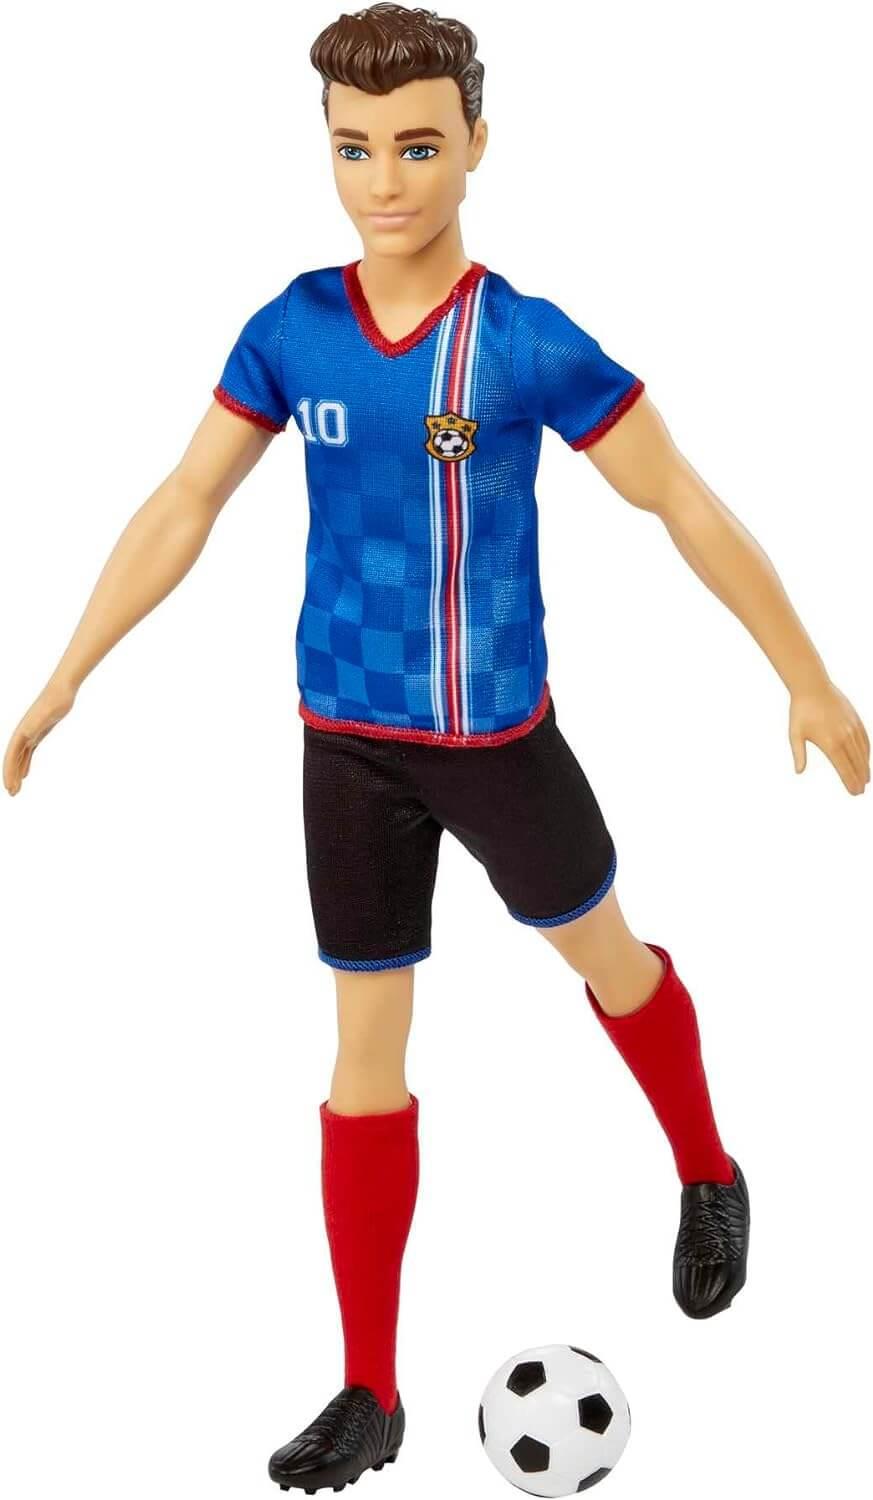 Barbie Ken Soccer Player Doll